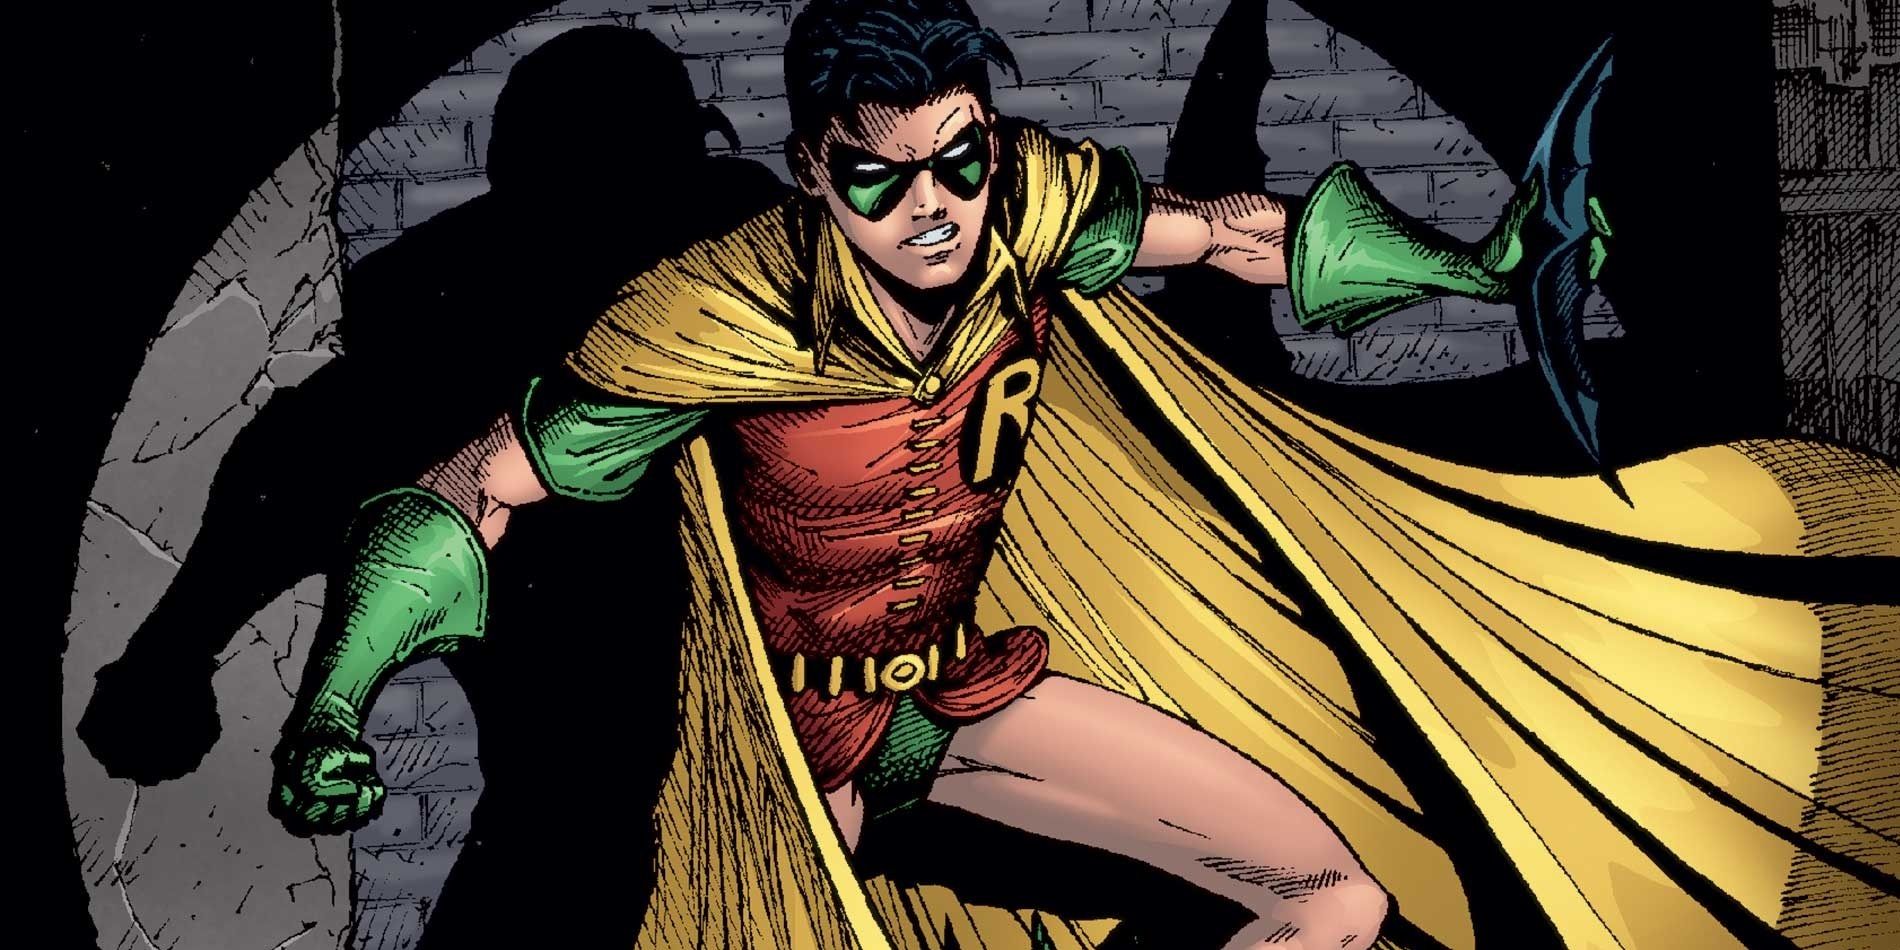 Robin in the DC comics